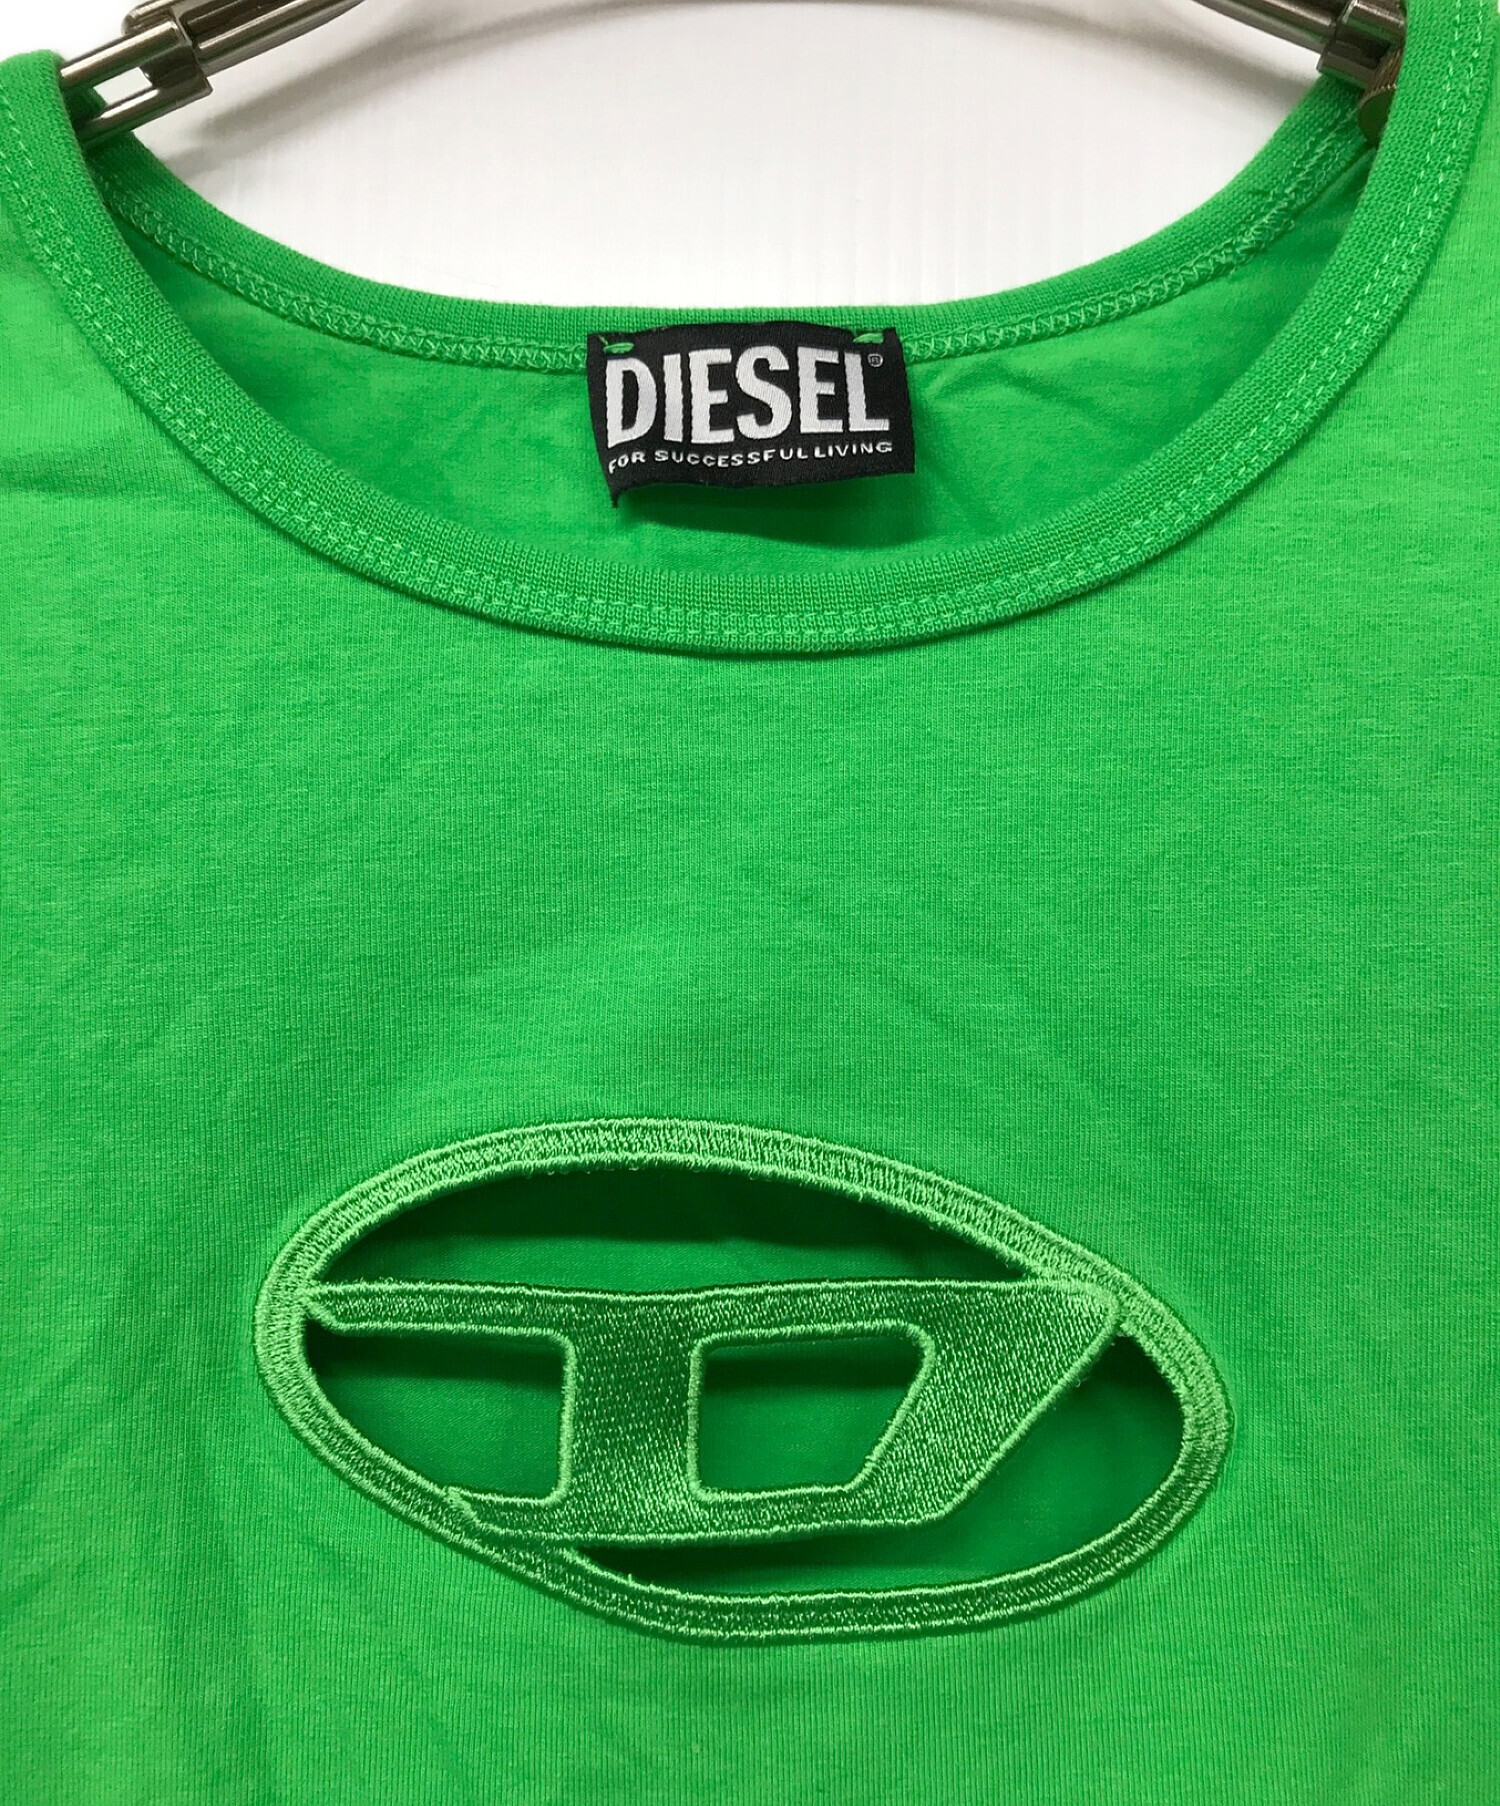 DIESEL (ディーゼル) 半袖カットソー グリーン サイズ:XL